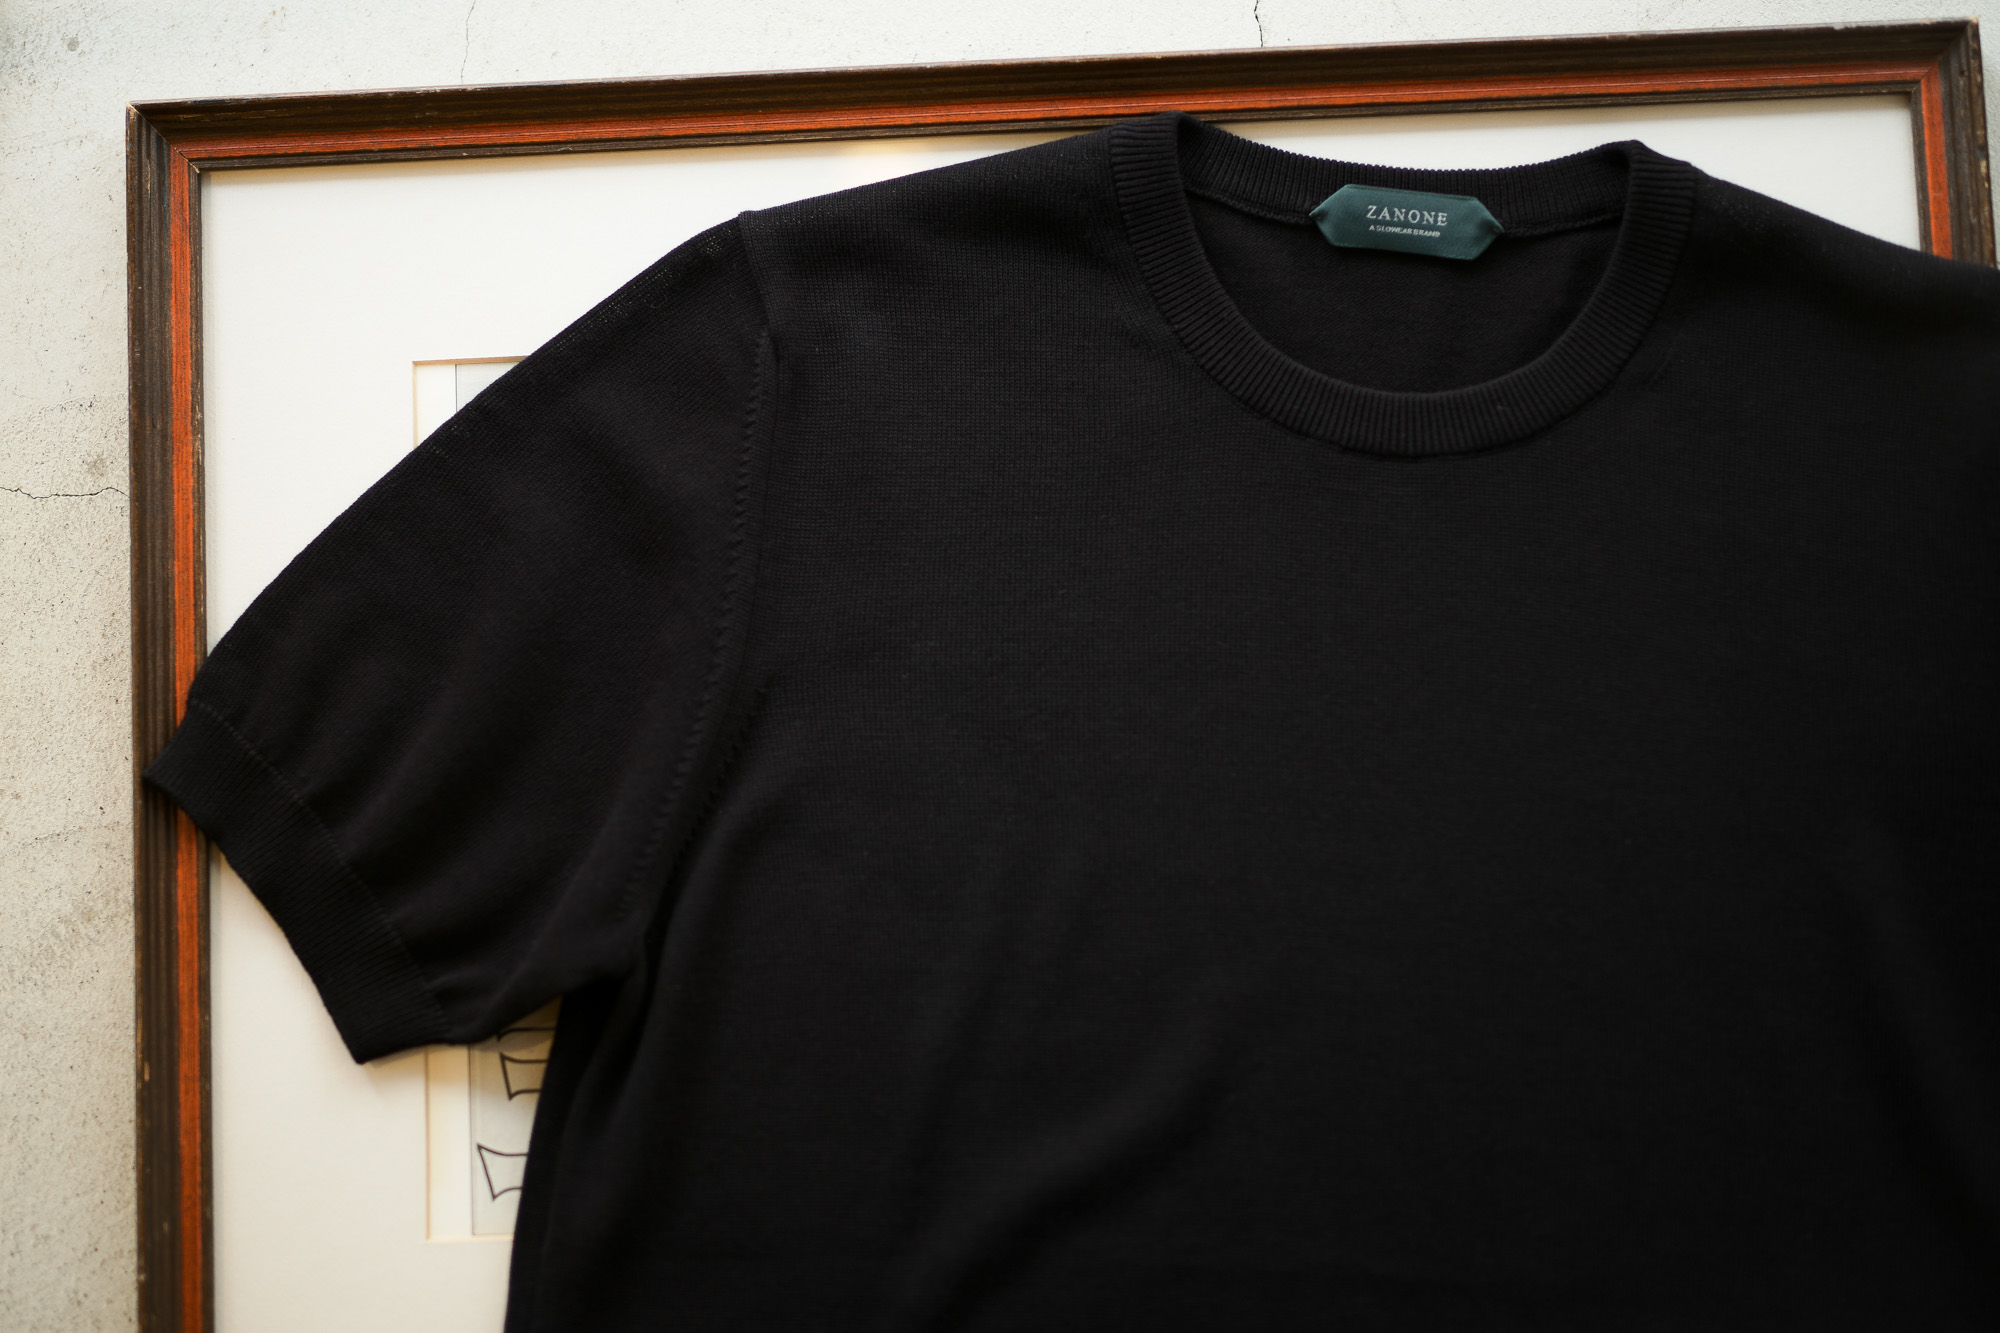 ZANONE (ザノーネ) Knit T-shirt (ニット Tシャツ) コットンニット Tシャツ BLACK (ブラック・Z3369) made in italy (イタリア製) 2019 春夏新作 愛知 名古屋 altoediritto アルトエデリット